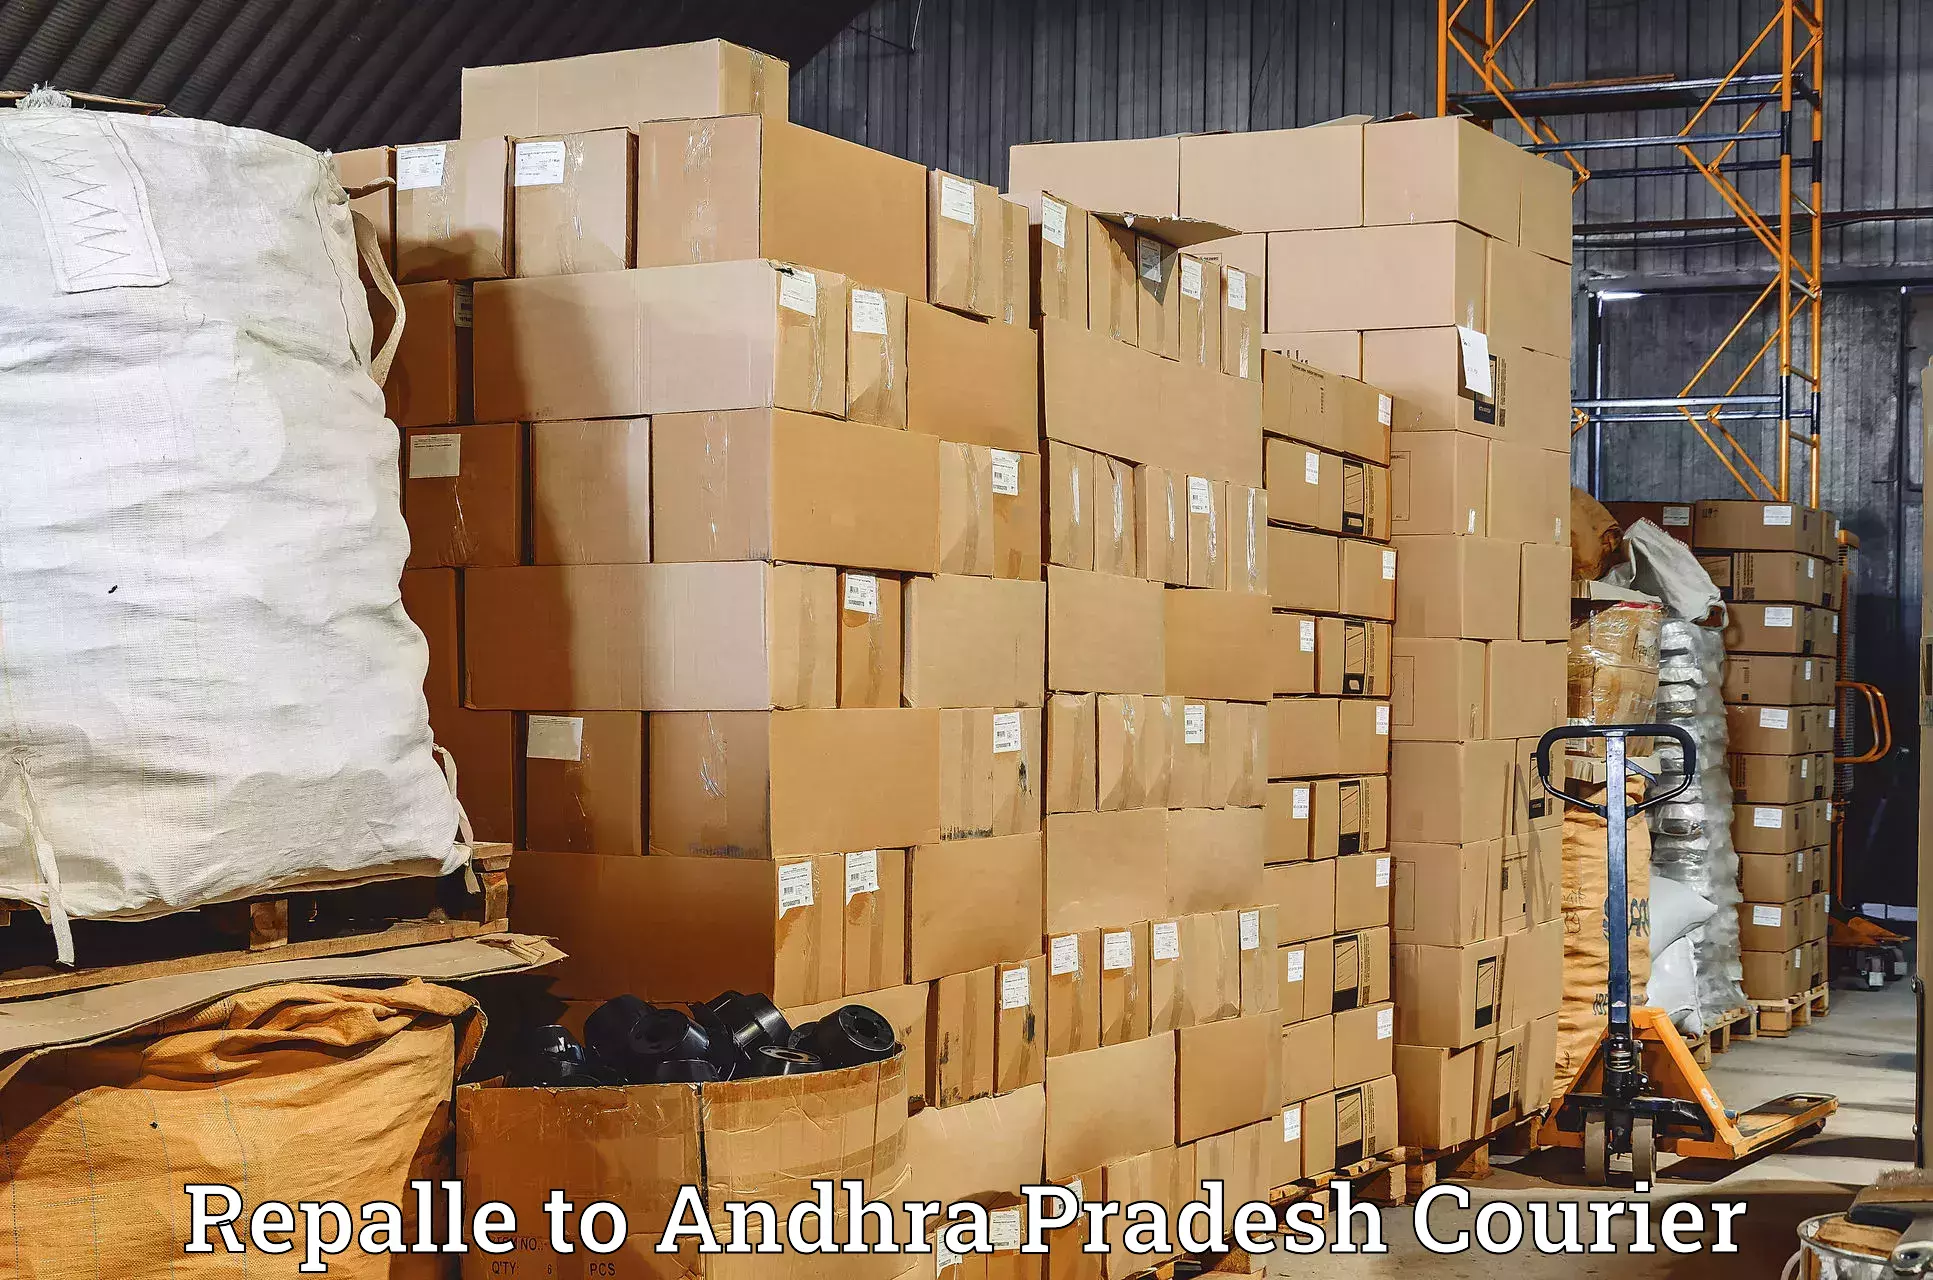 Express shipping Repalle to Andhra Pradesh